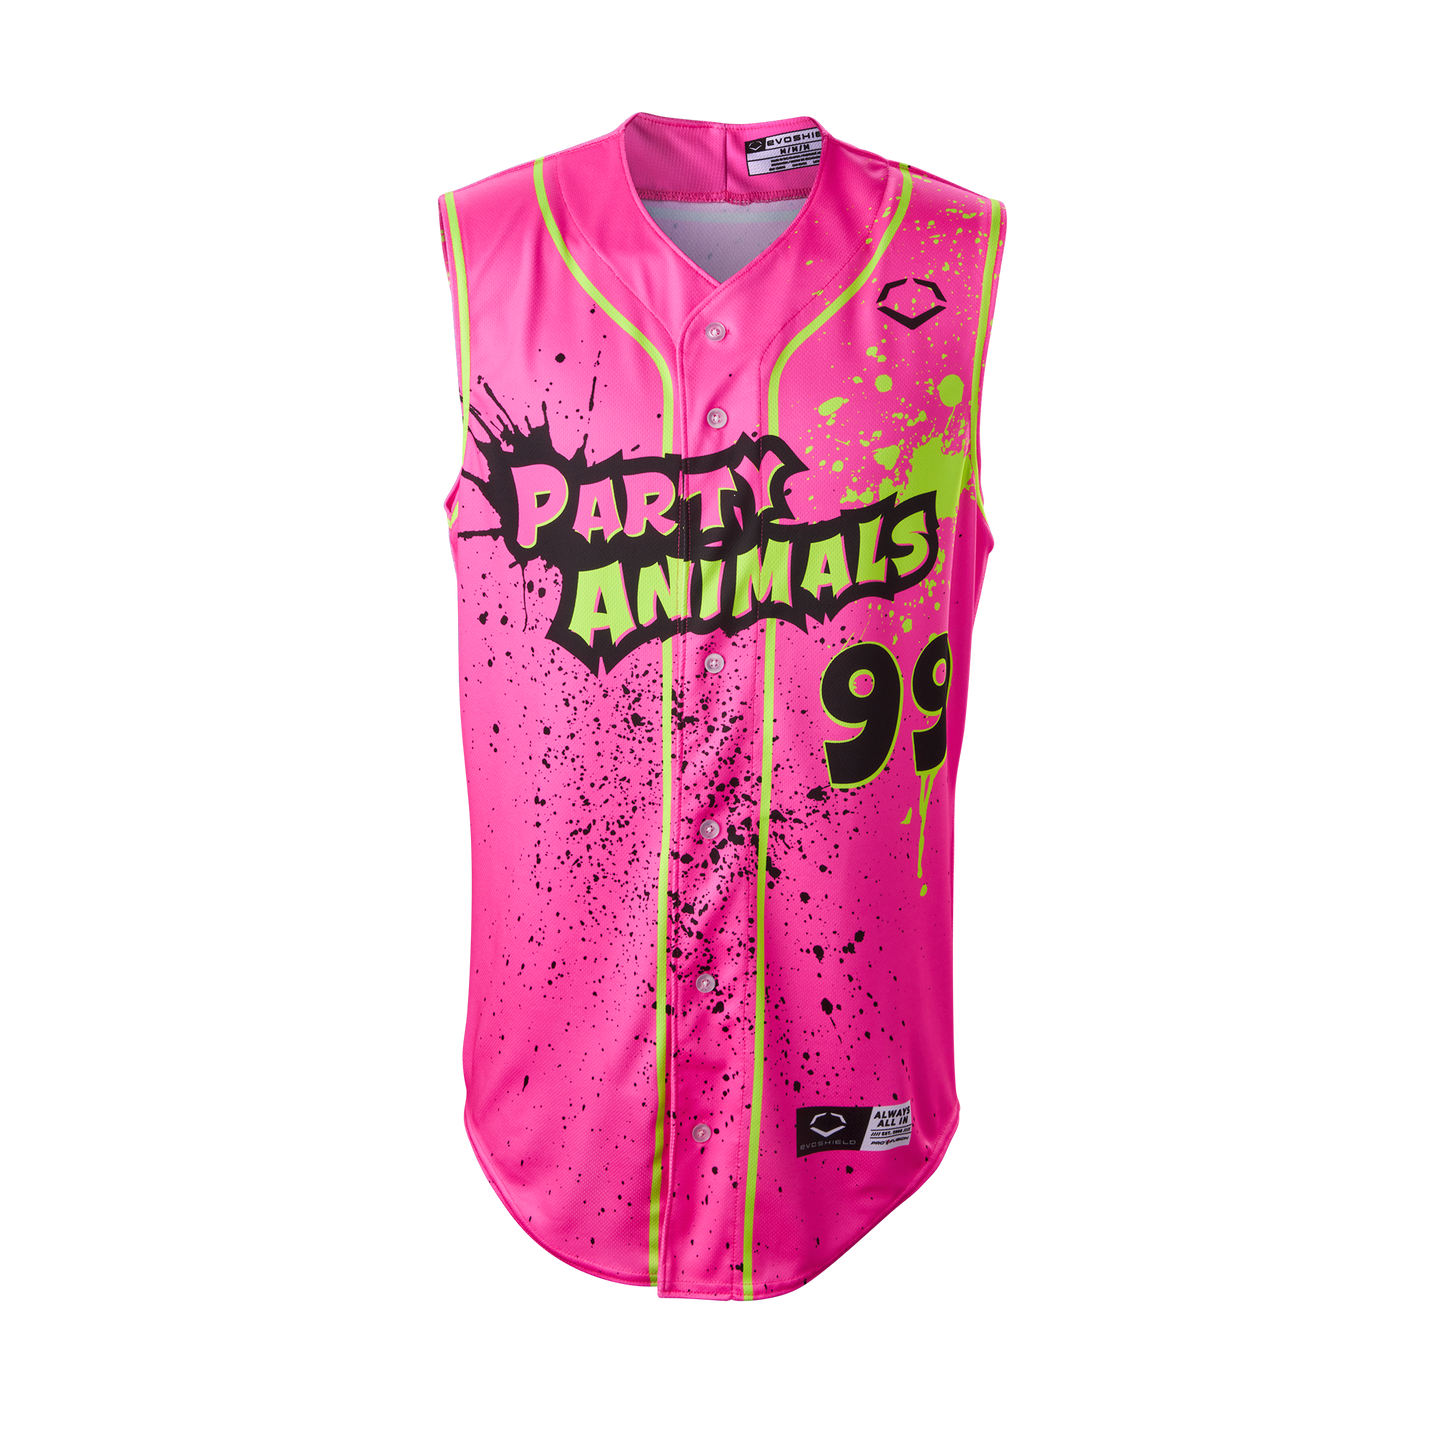 YOUTH Party Animals EvoShield Sleeveless Jersey - Pink Splatter Paint